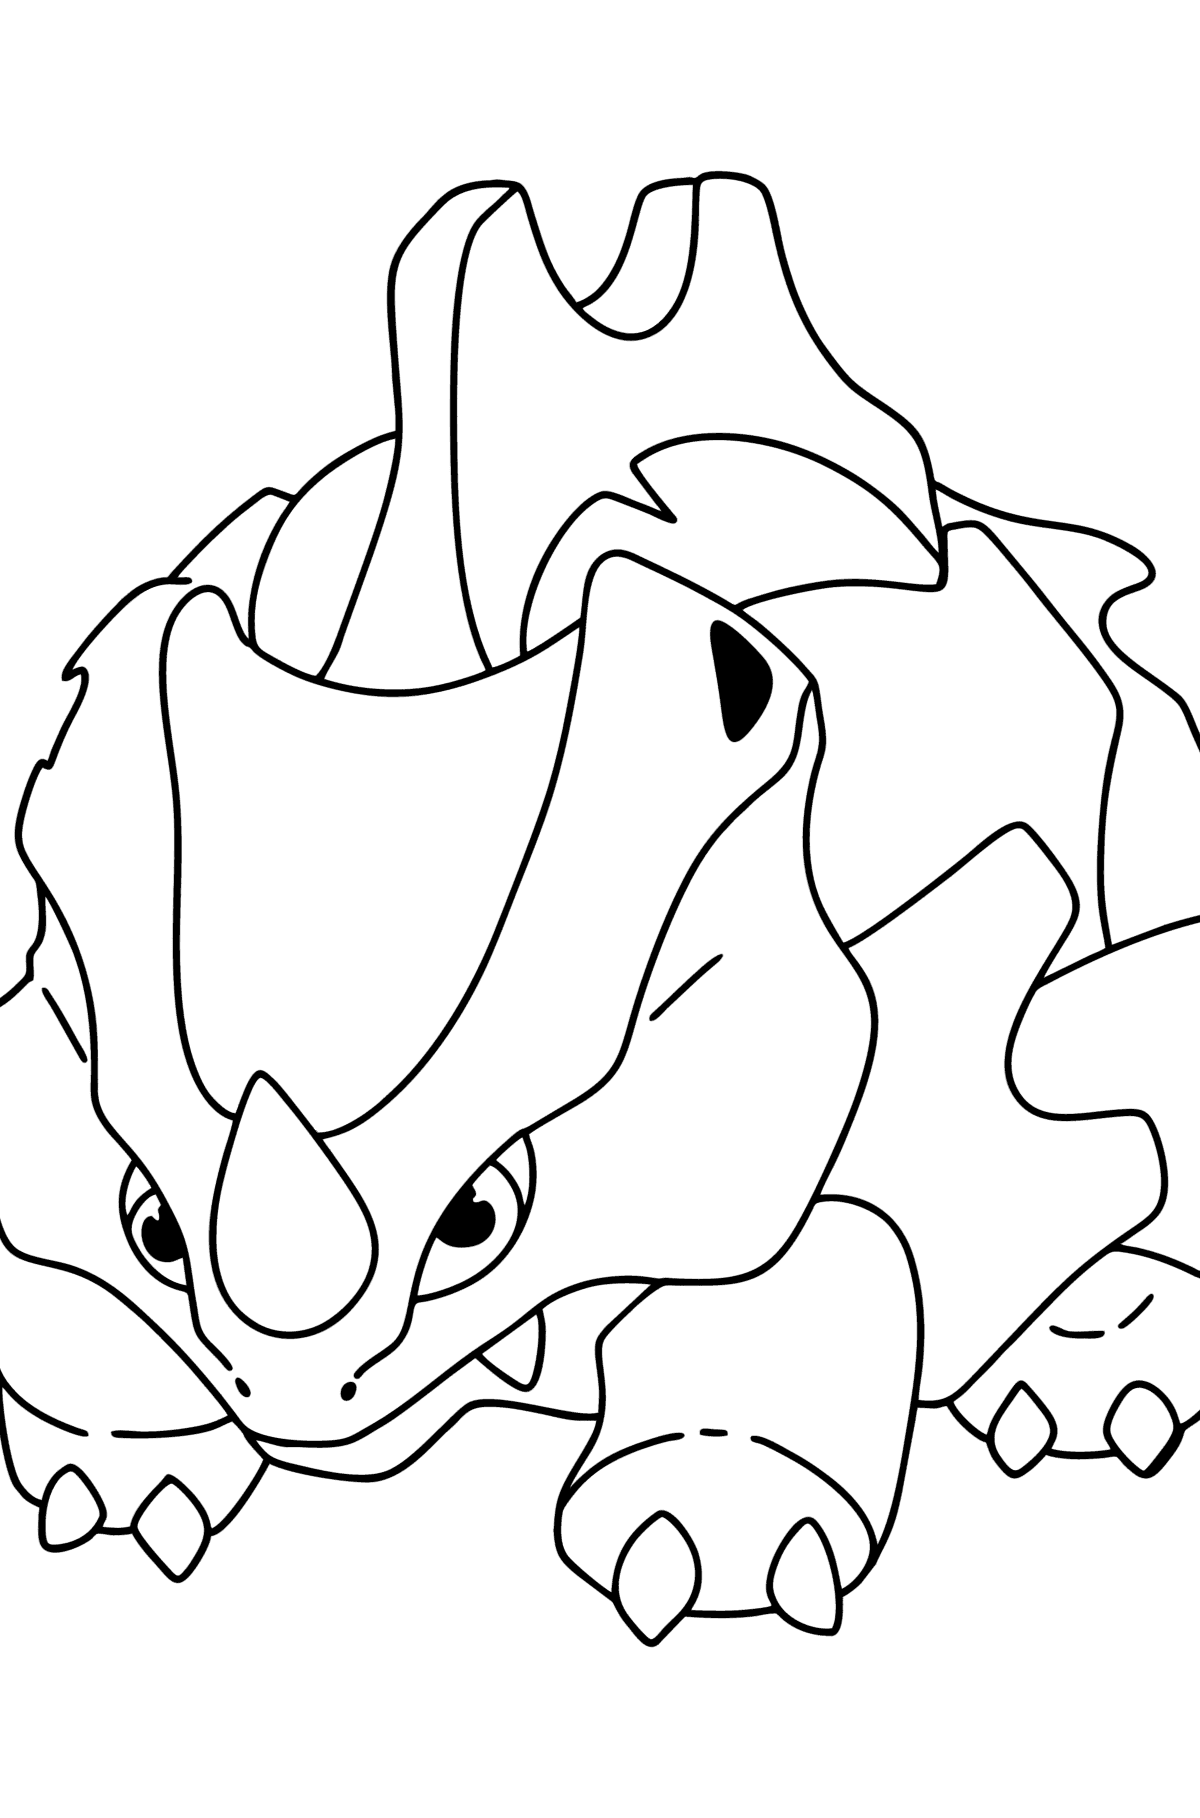 Раскраска Pokemon Go Rhyhorn - Картинки для Детей